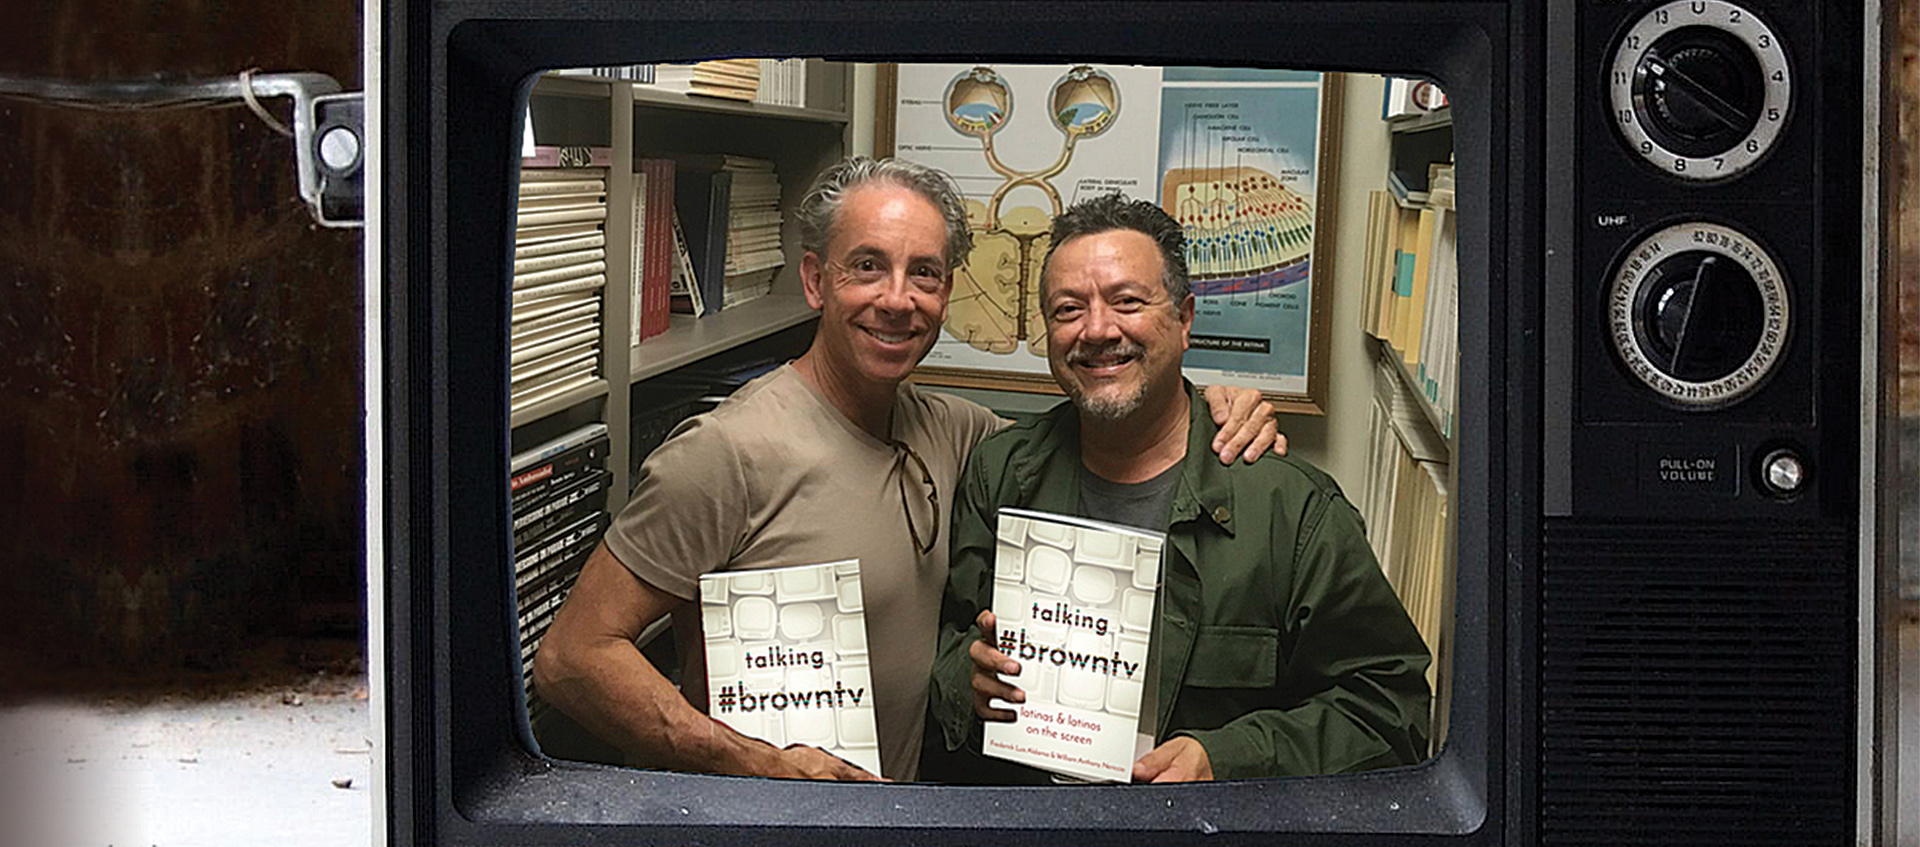  Frederick Aldama and William Nericcio holding their book Talking #browntv